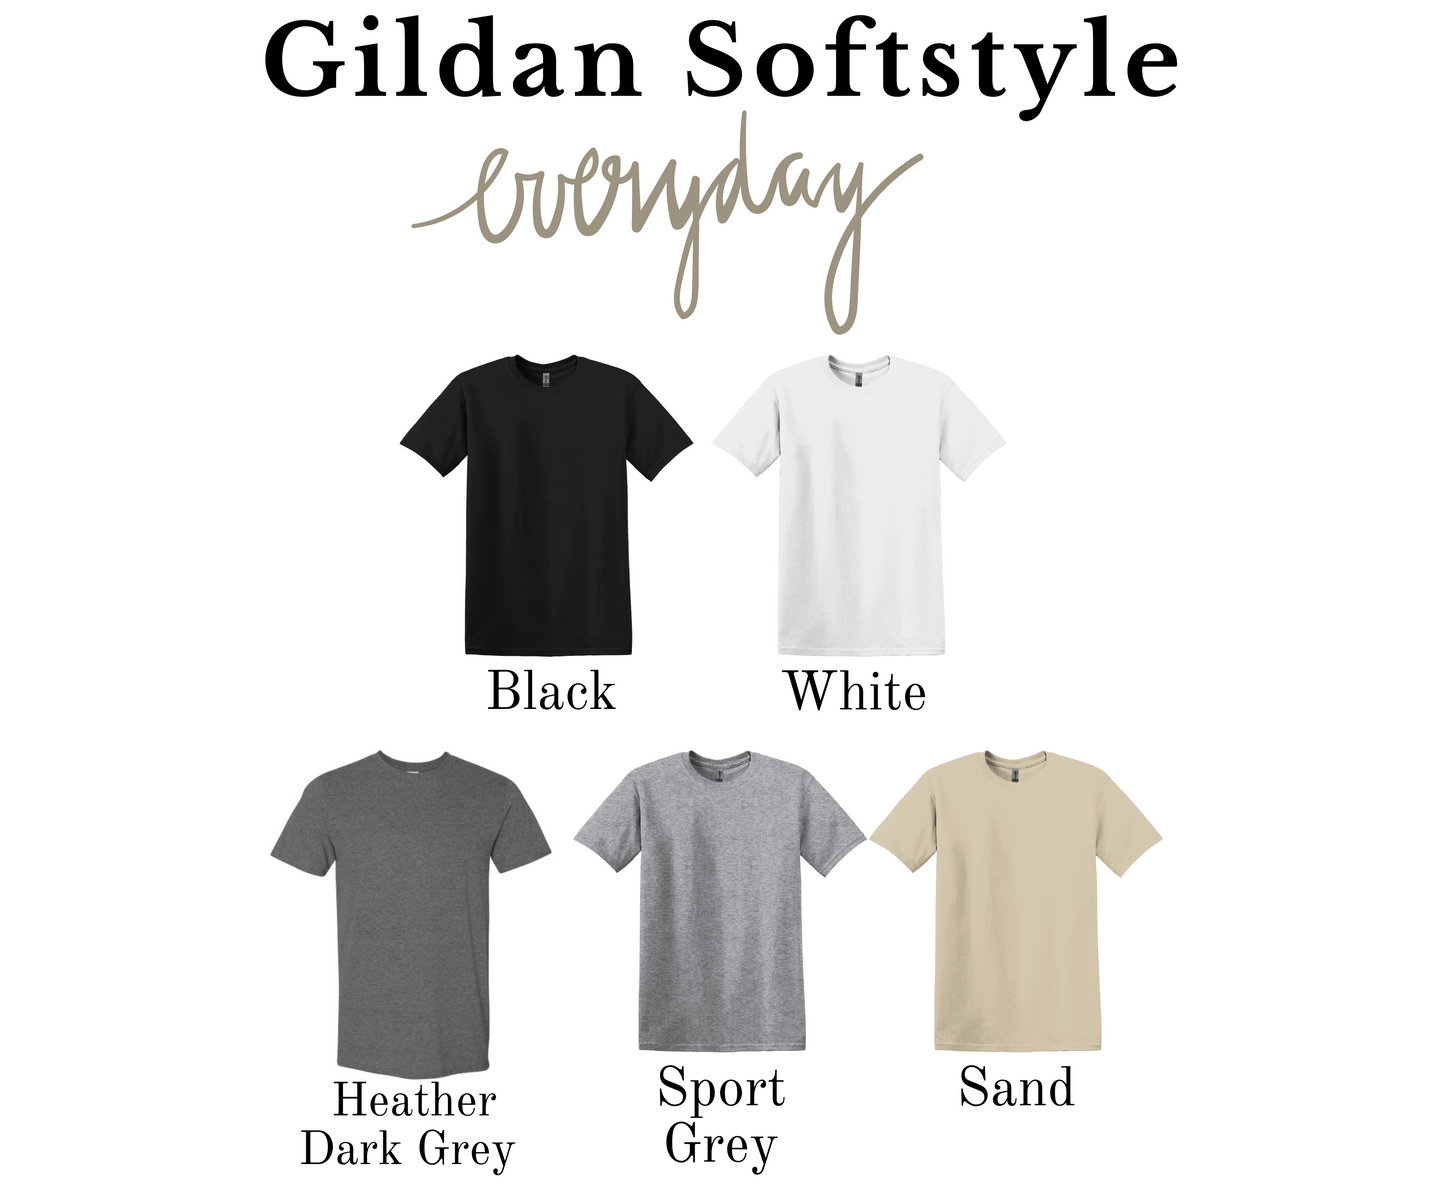 Happy HalloThankMas Wine Glasses  Gildan Softstyle T-shirt or Sweatshirt